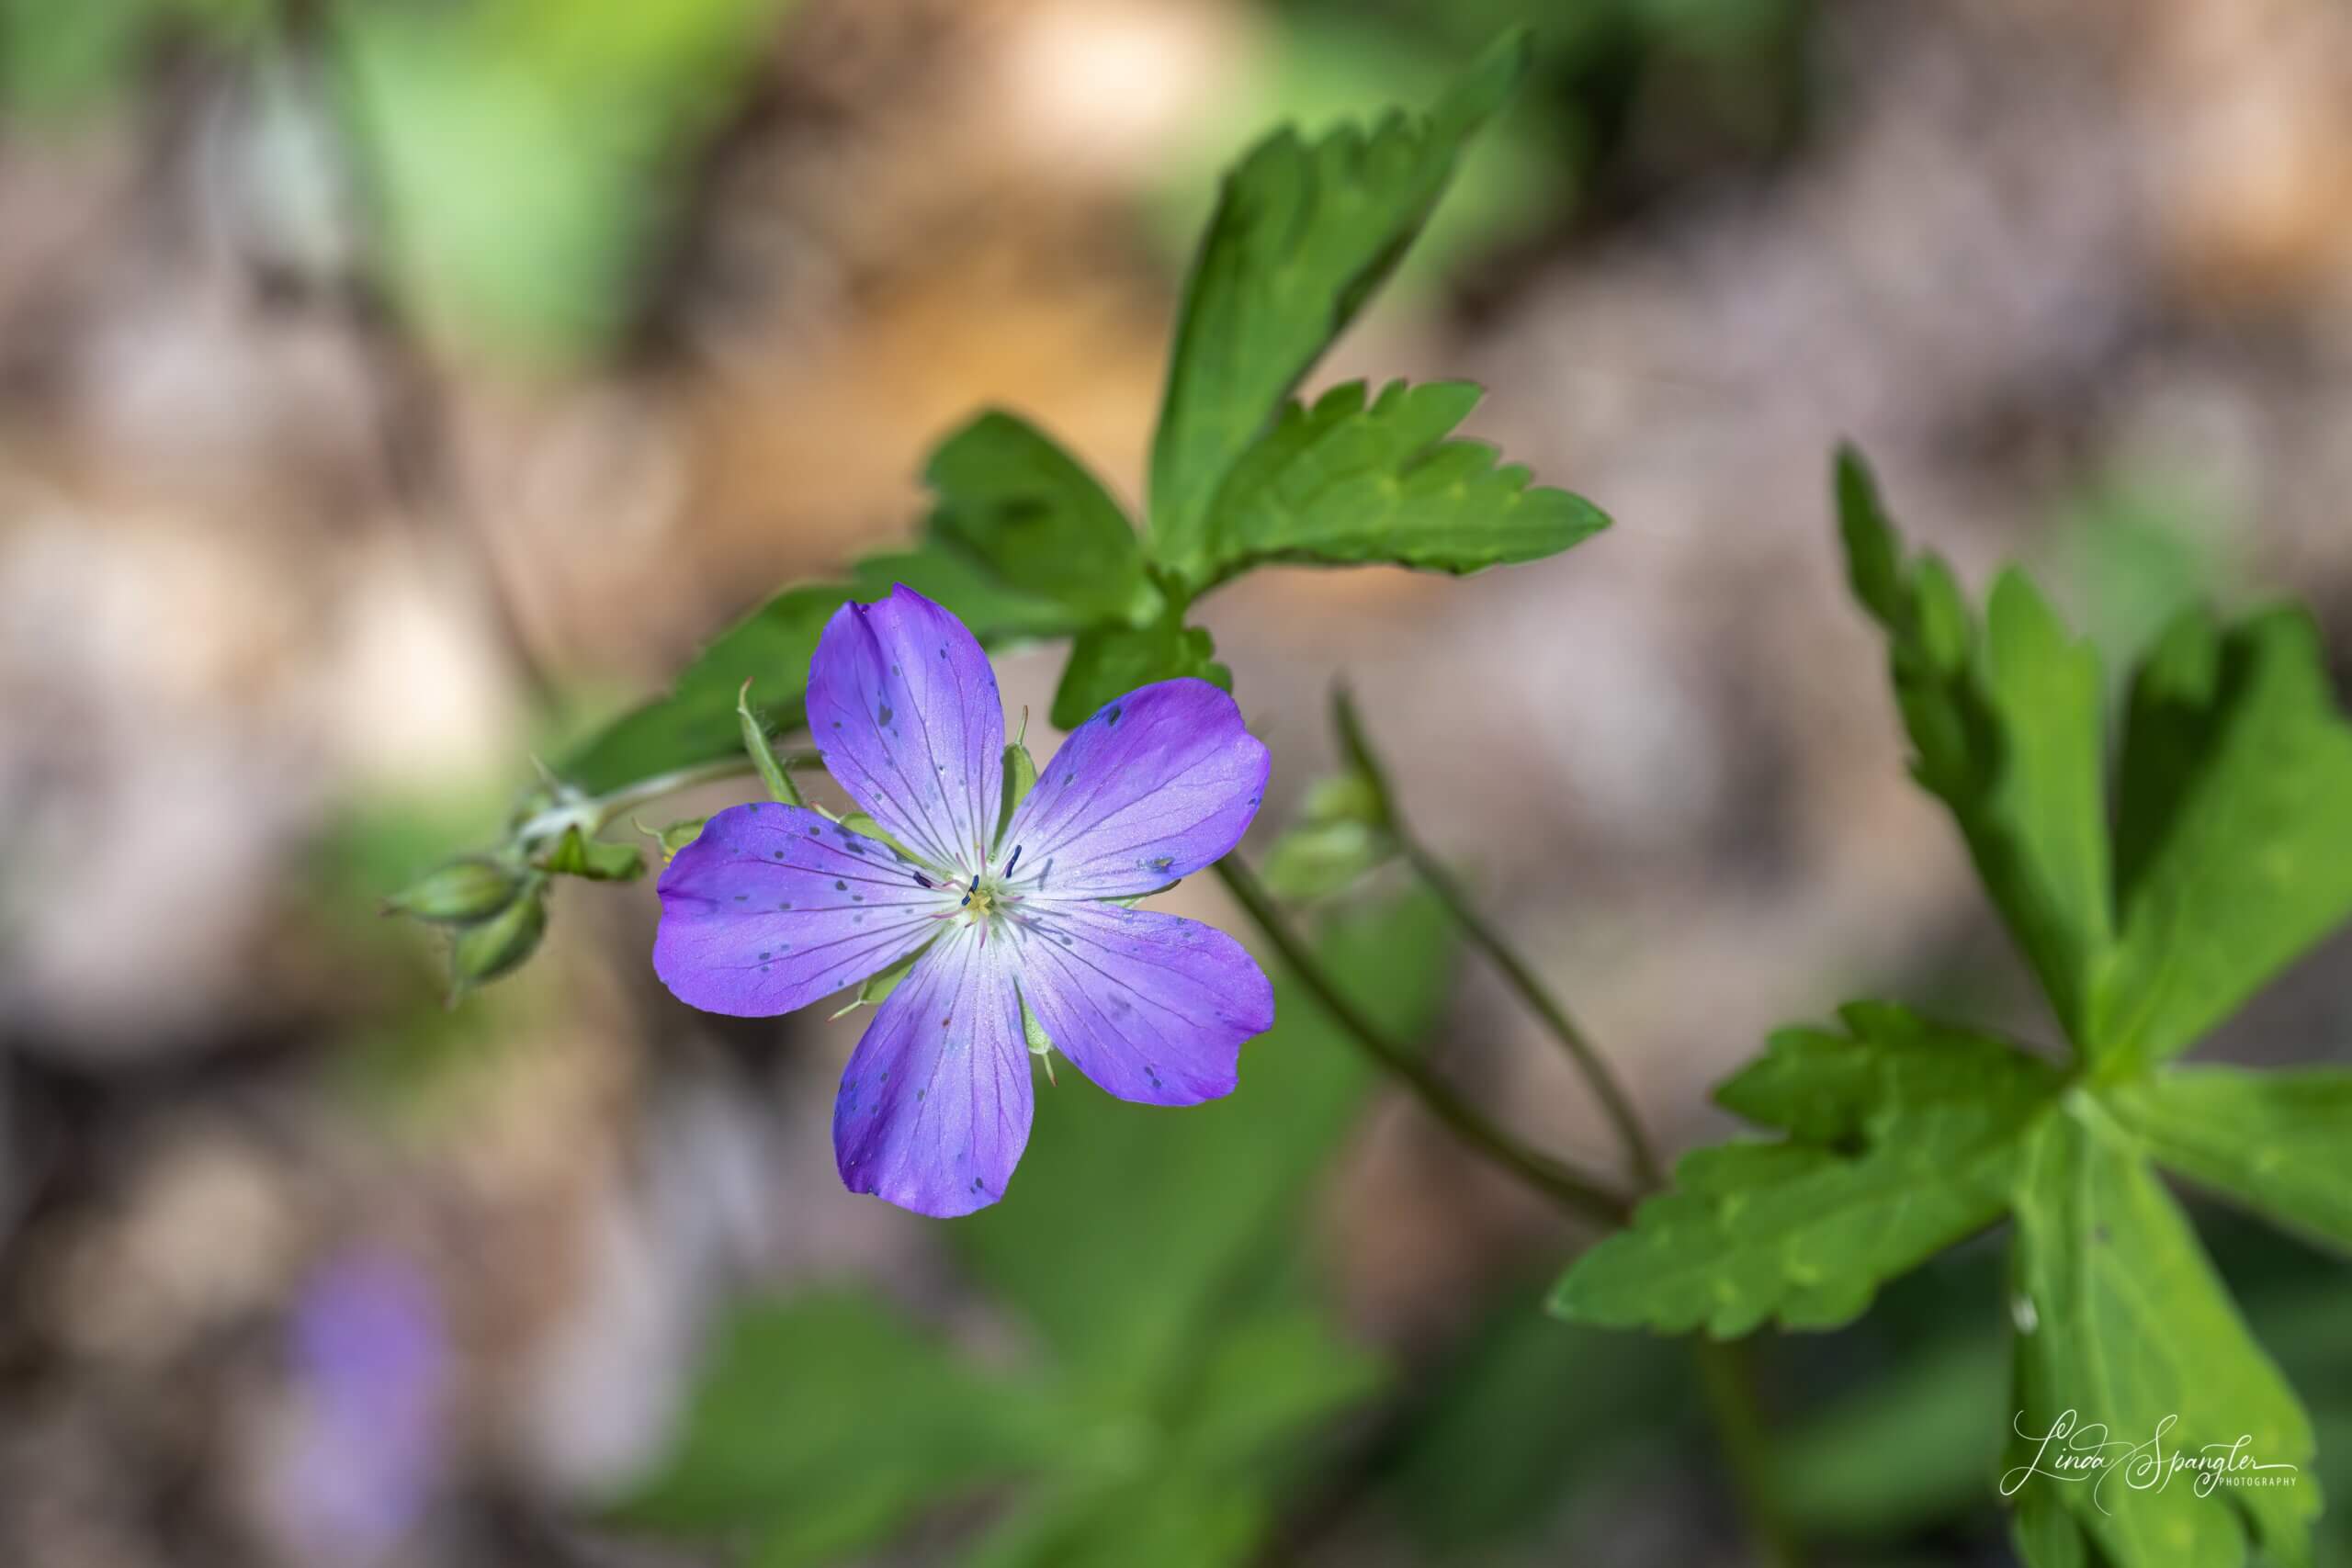 wildflower along Smokemont Trail - photo by Linda Spangler